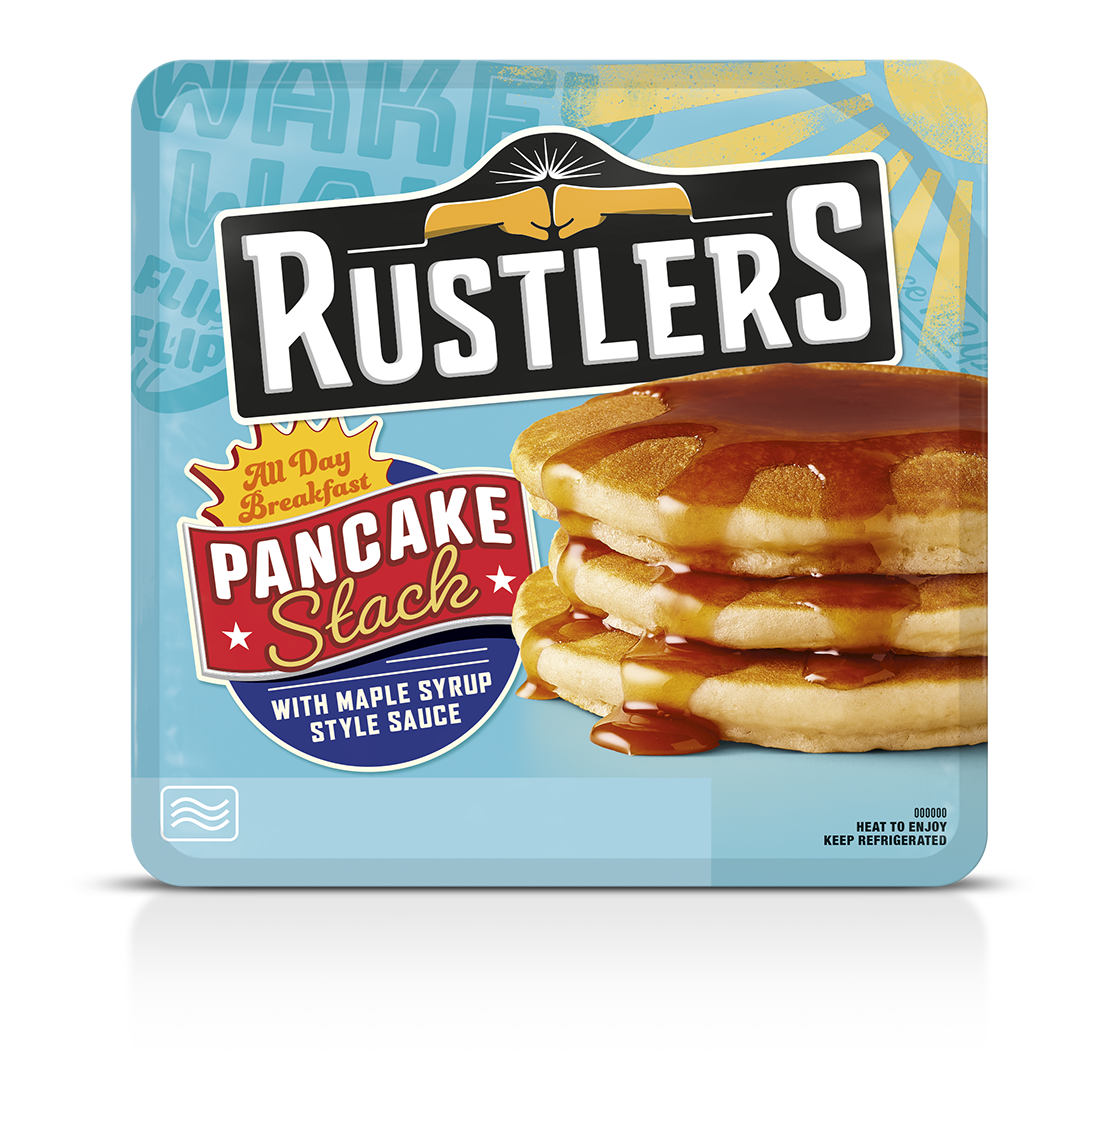 Rustlers expands C-channel breakfast offering